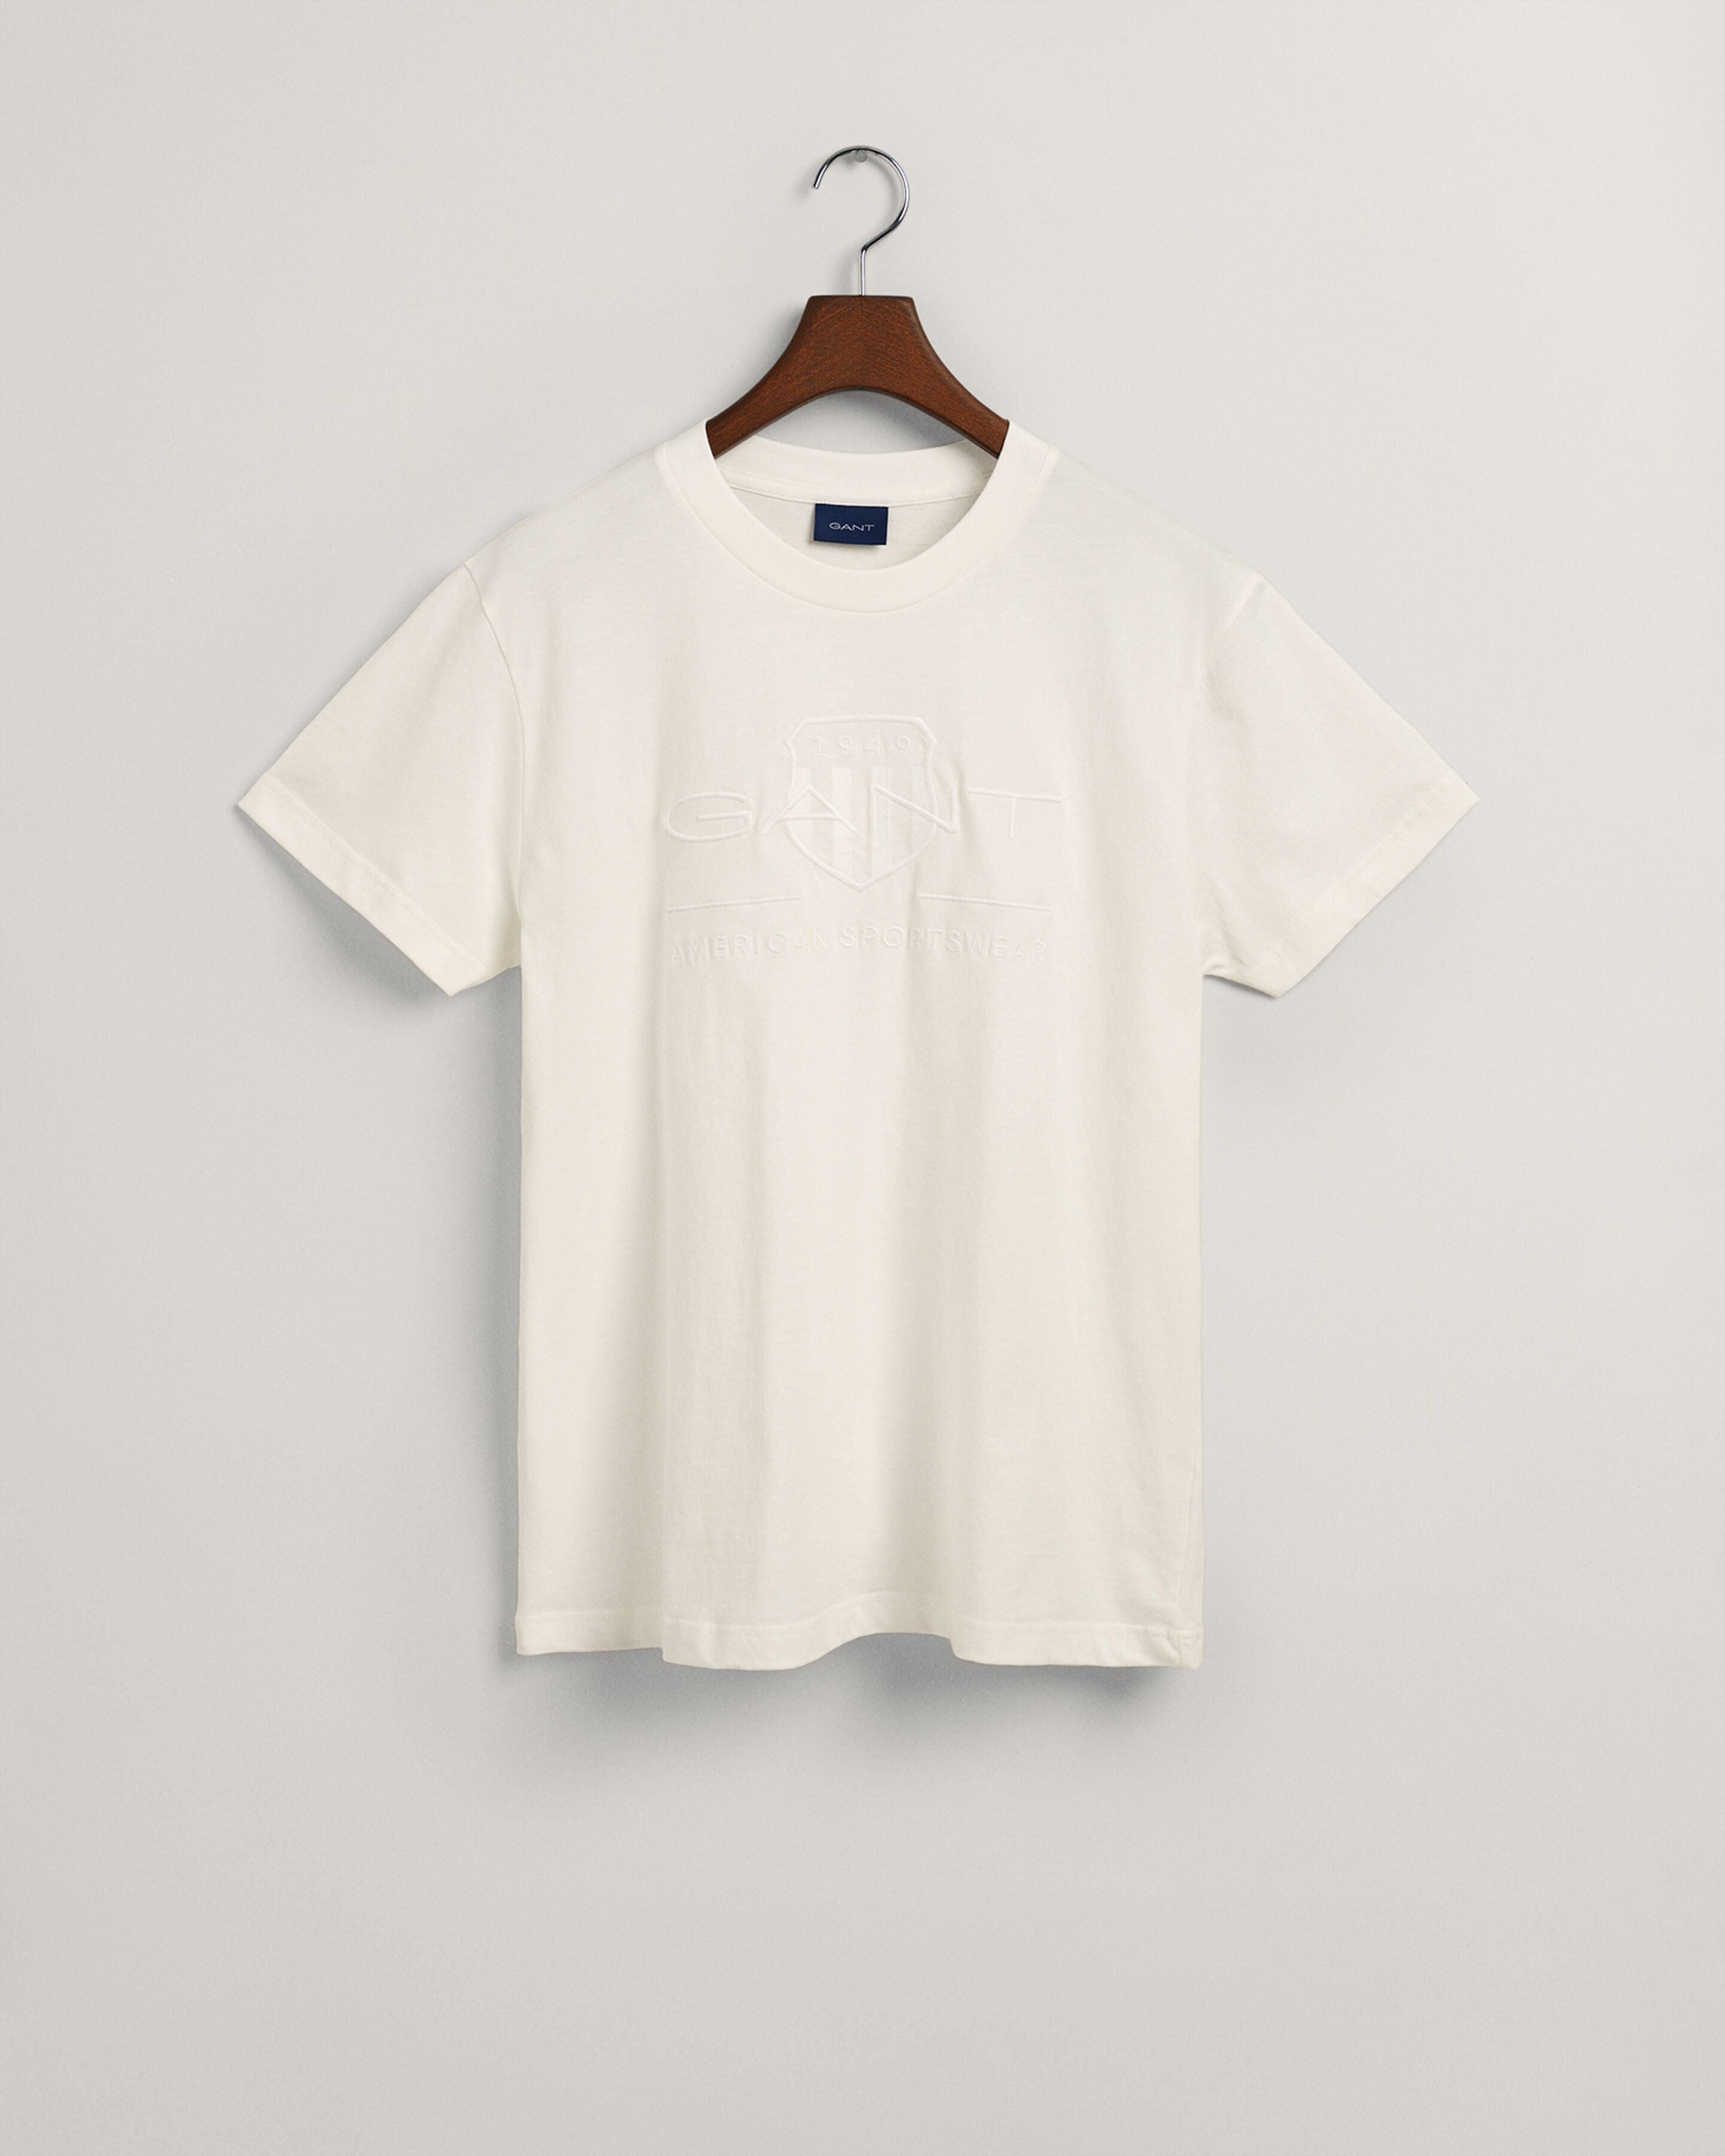 Gant Tonal Archive Shield T-Shirt